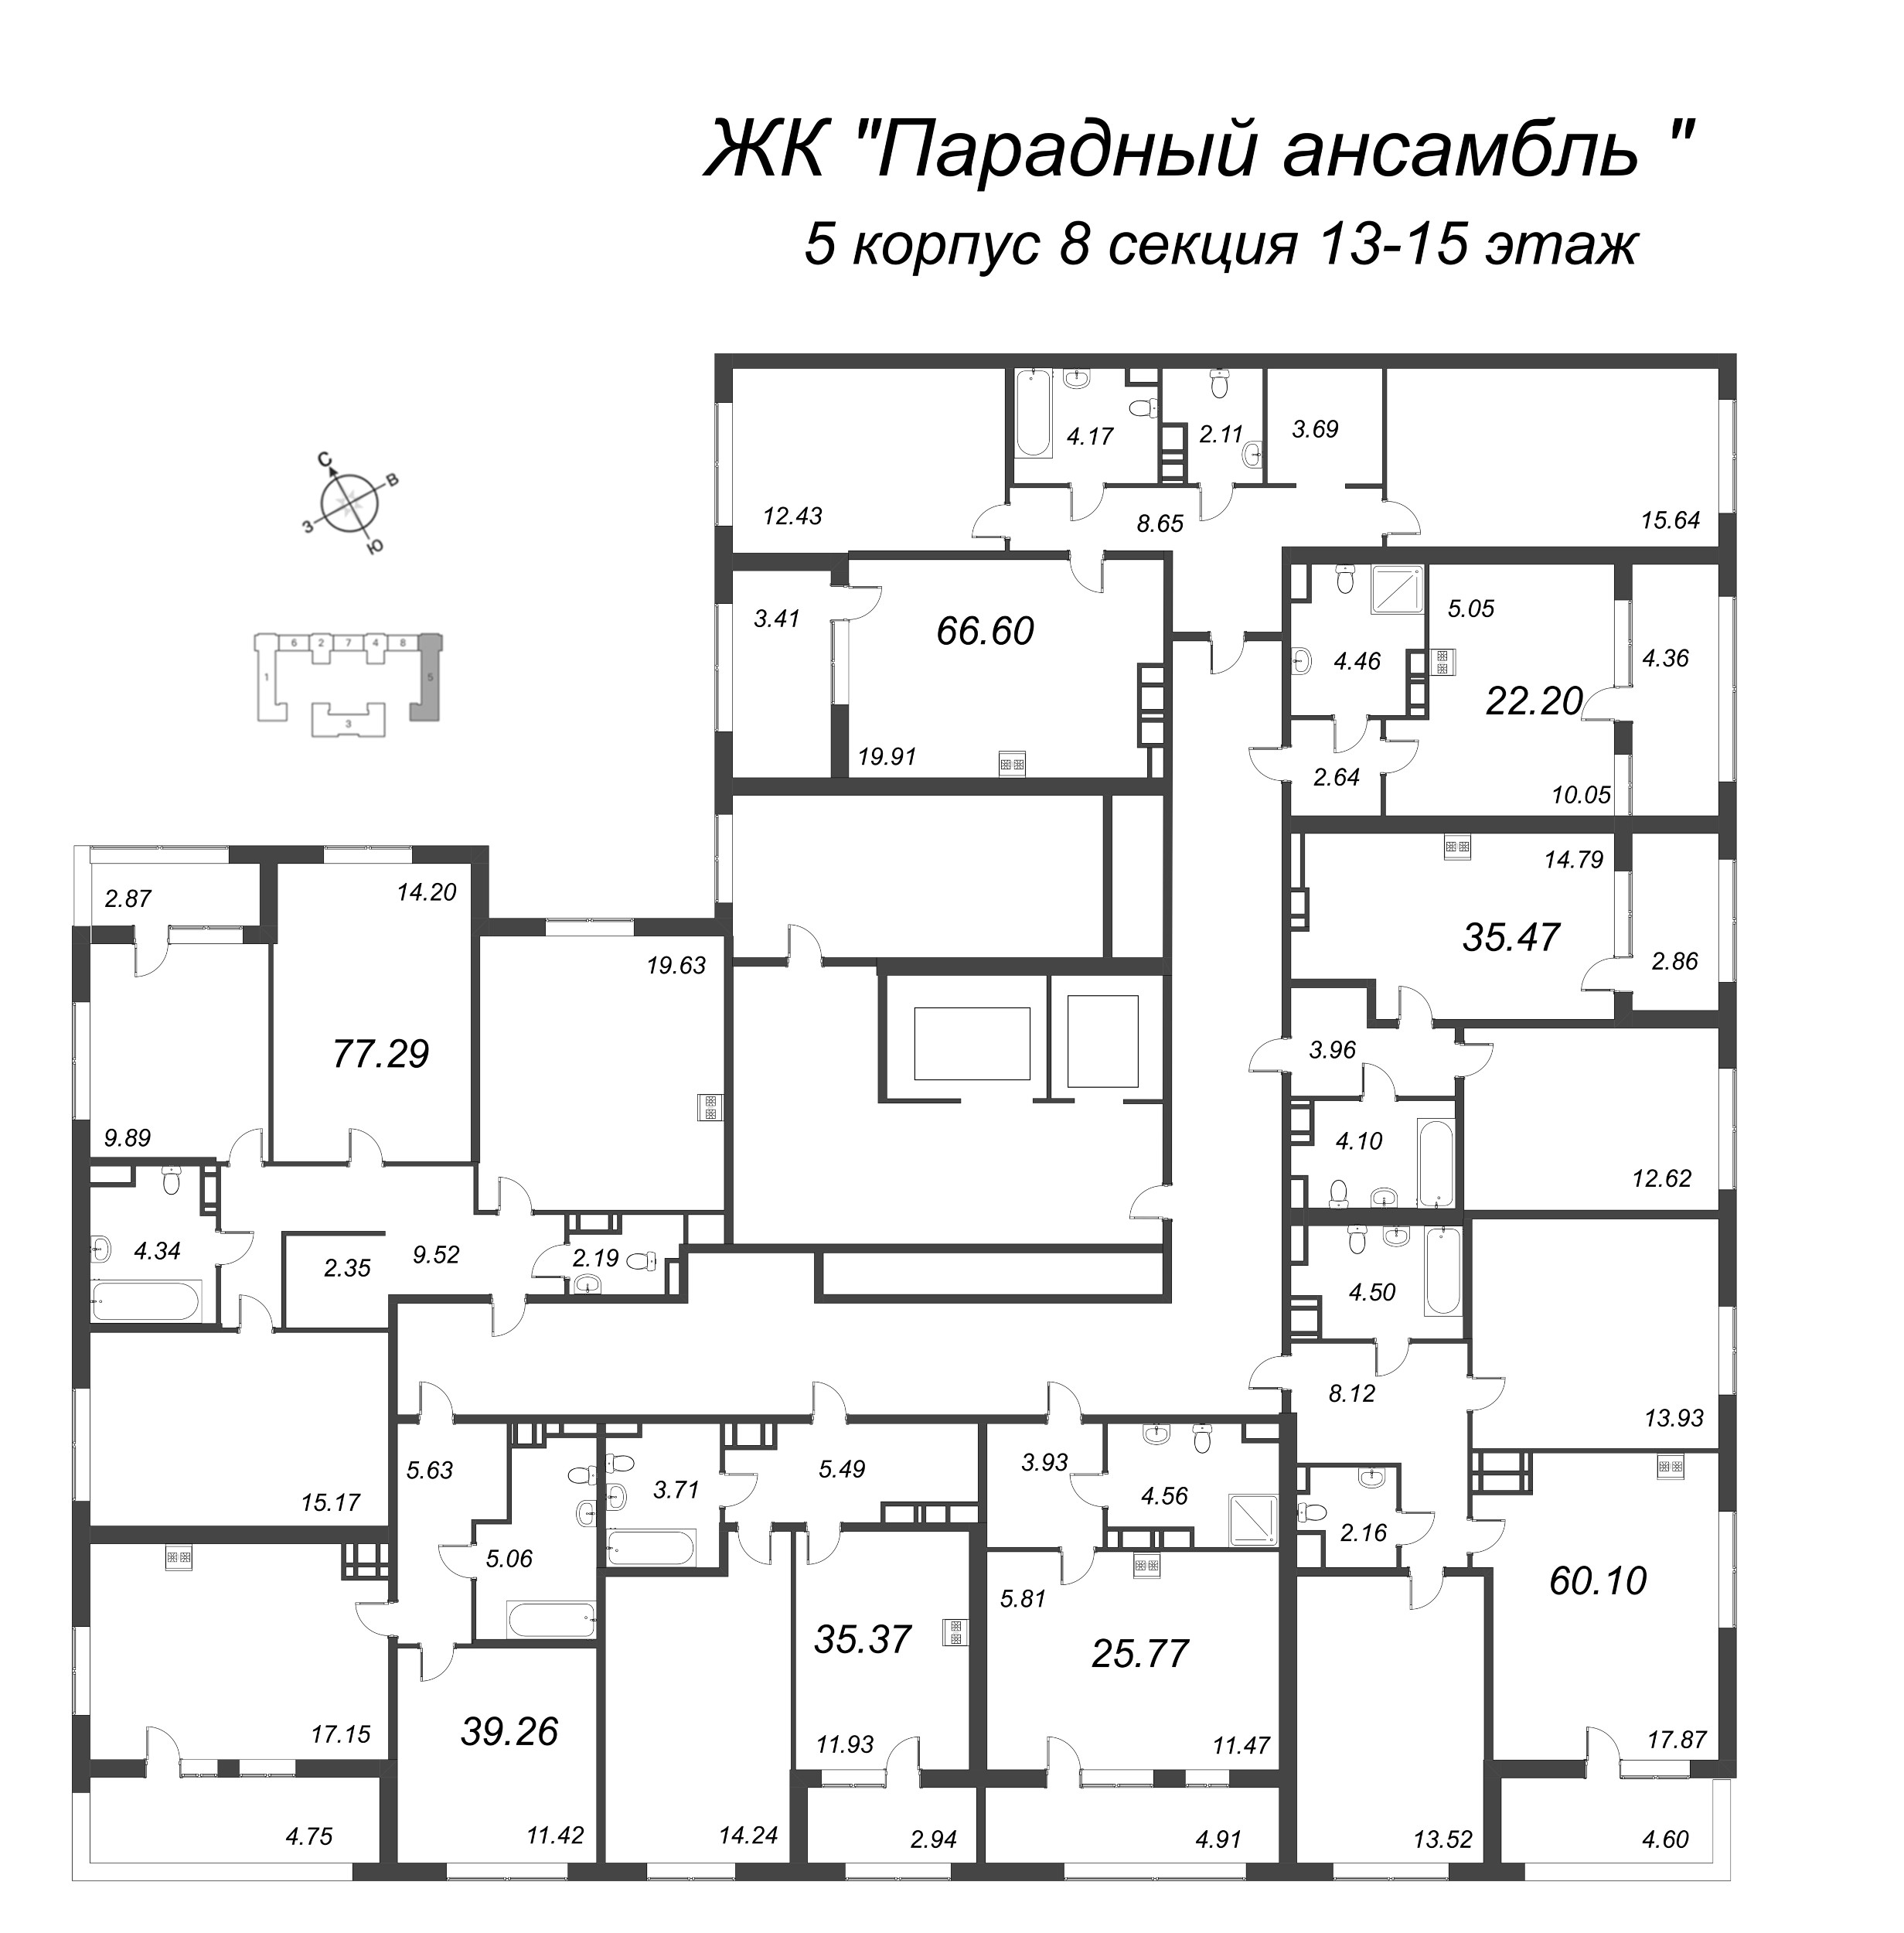 4-комнатная (Евро) квартира, 77.29 м² - планировка этажа